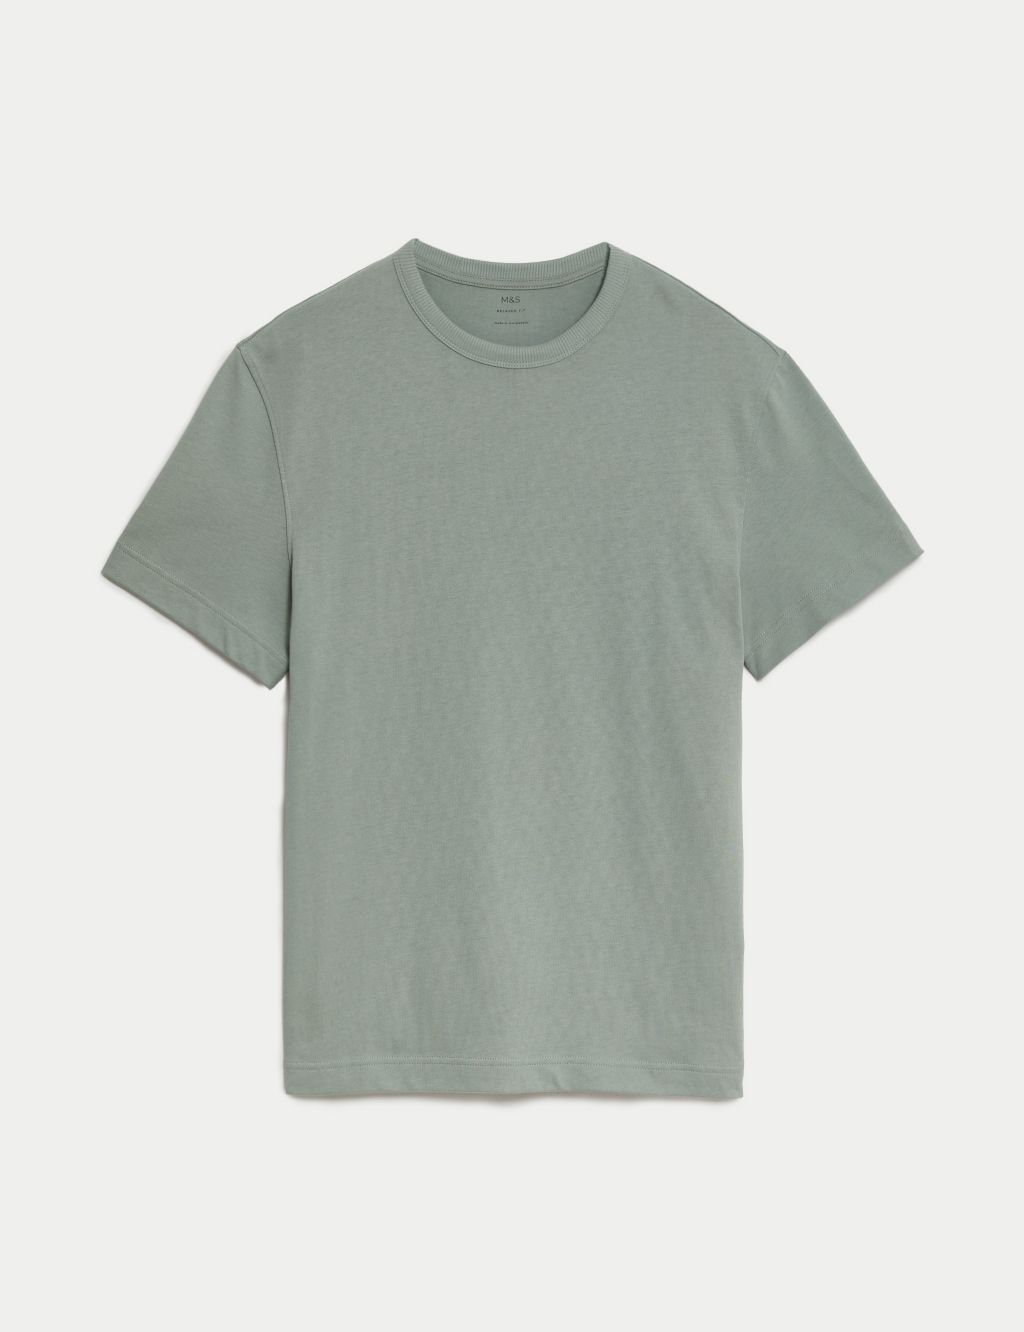 Oversized Pure Cotton T-Shirt image 2